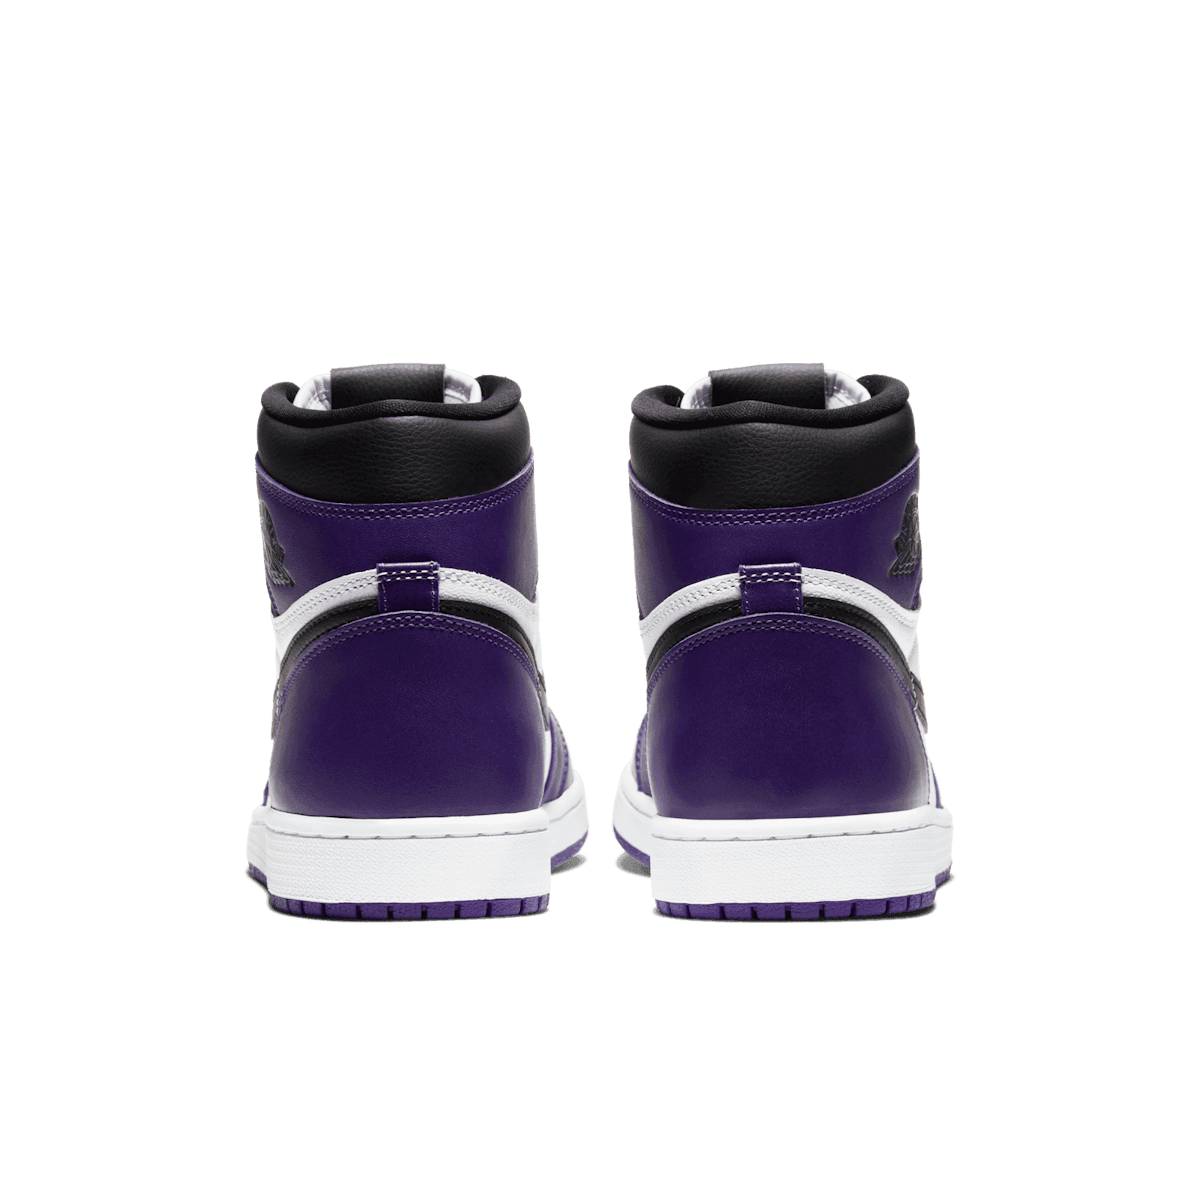 Jordan 1 Retro High Court Purple White - 555088-500 Raffles and Release Date